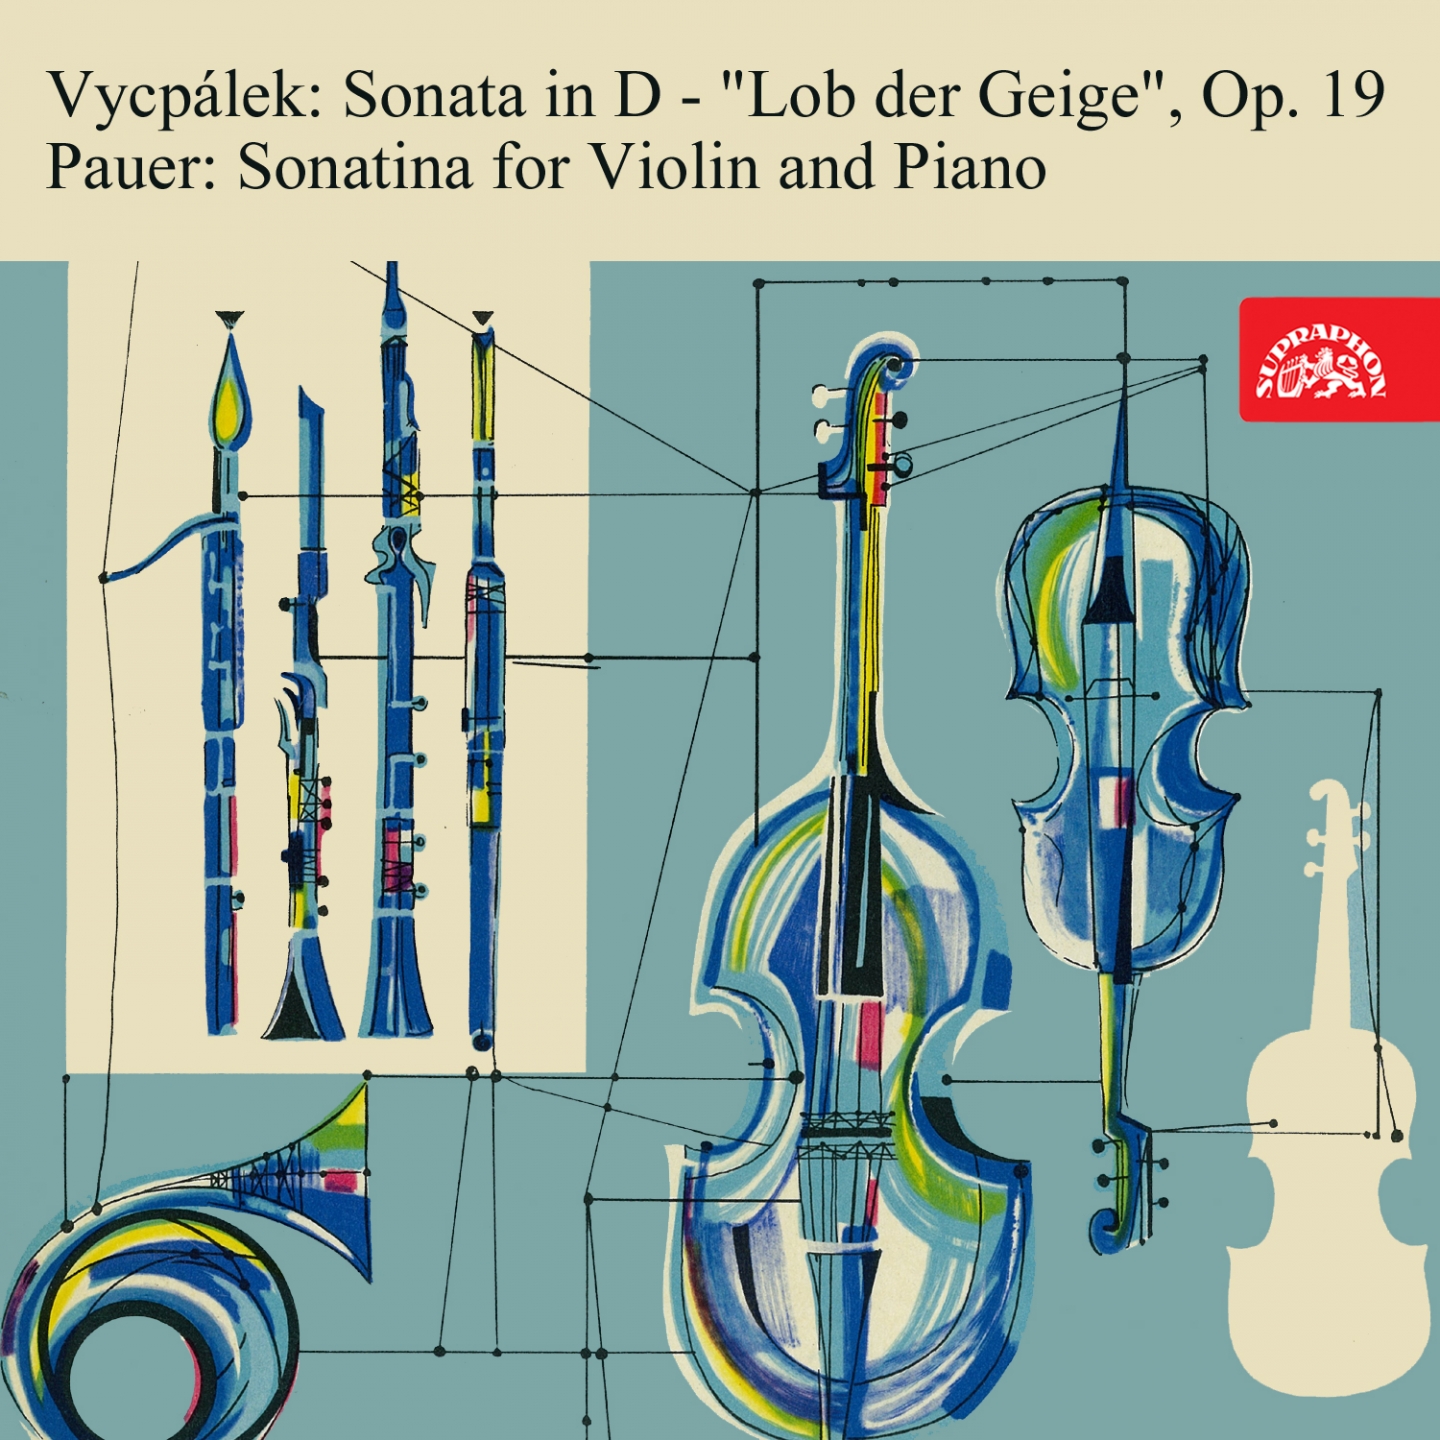 Sonata in D Major, Op. 19 "Lob der Geige"